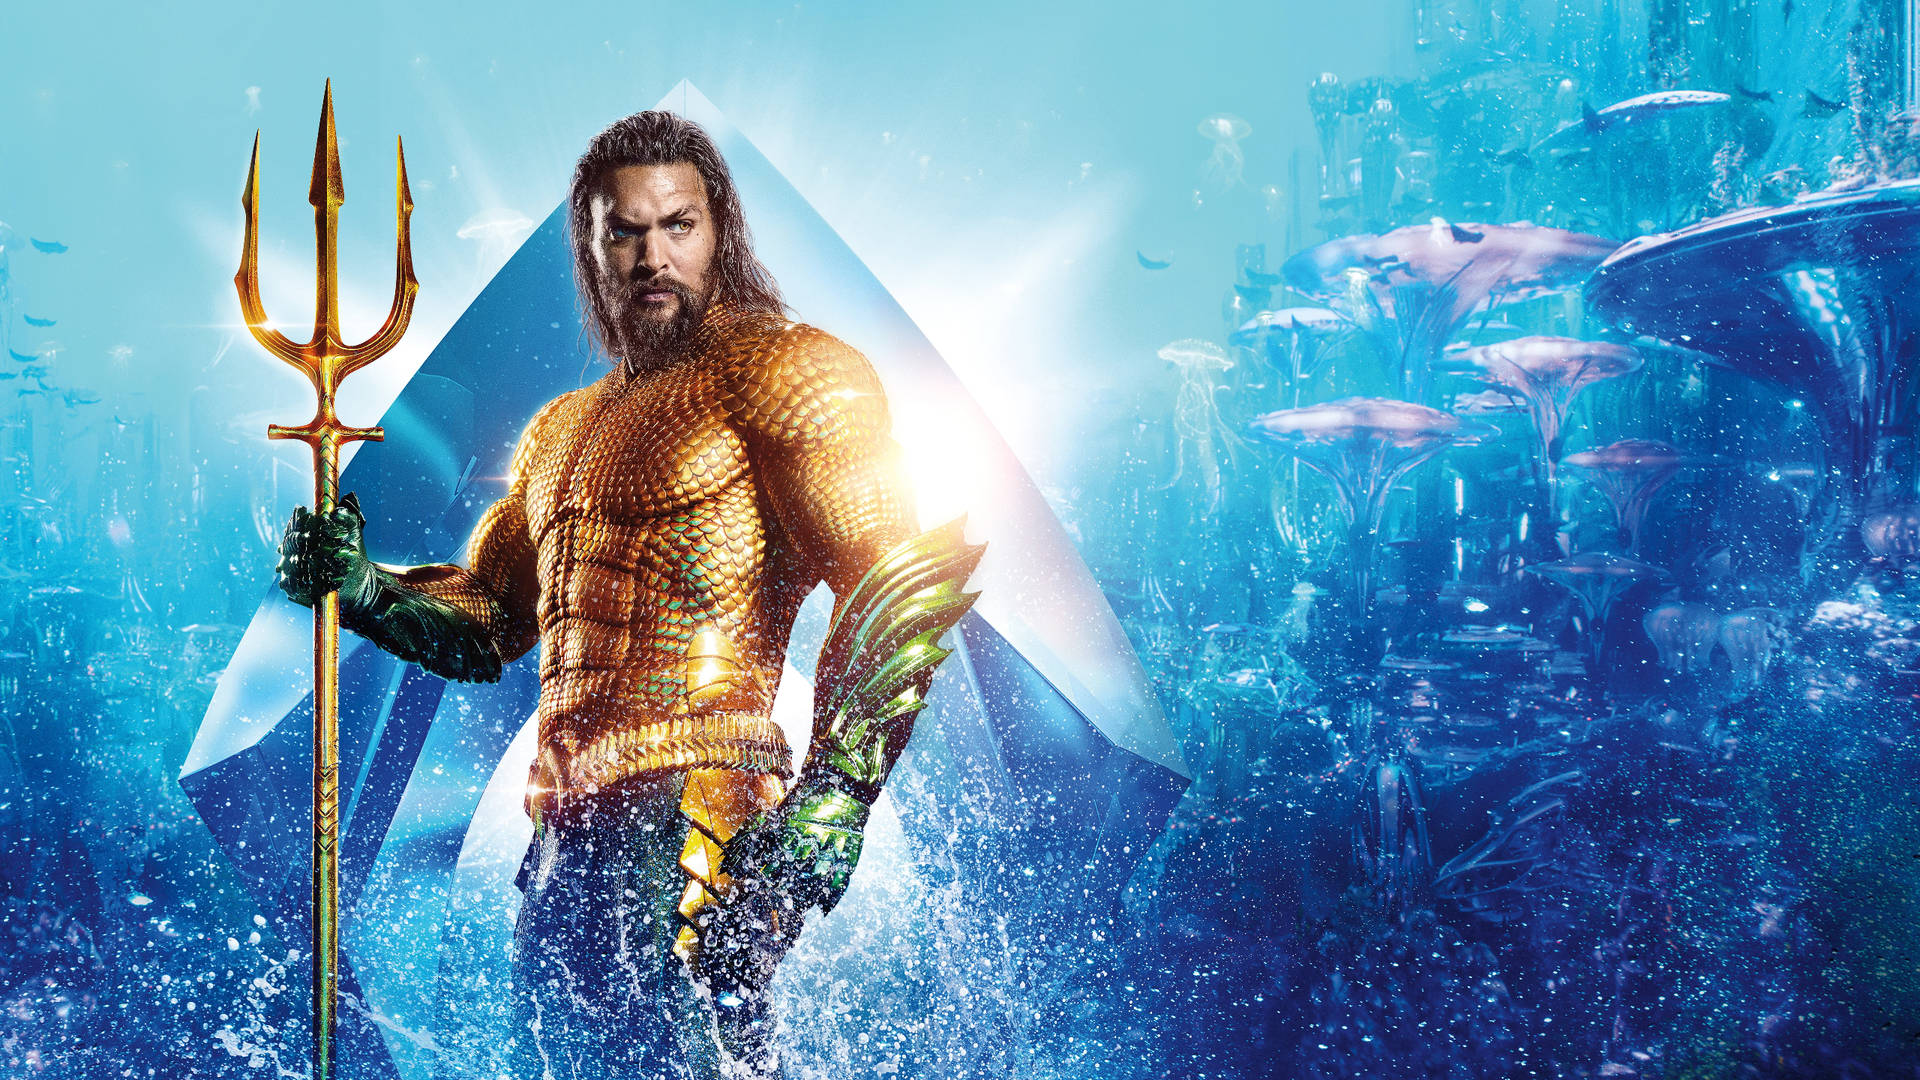 Aquaman Digital Movie Cover Background